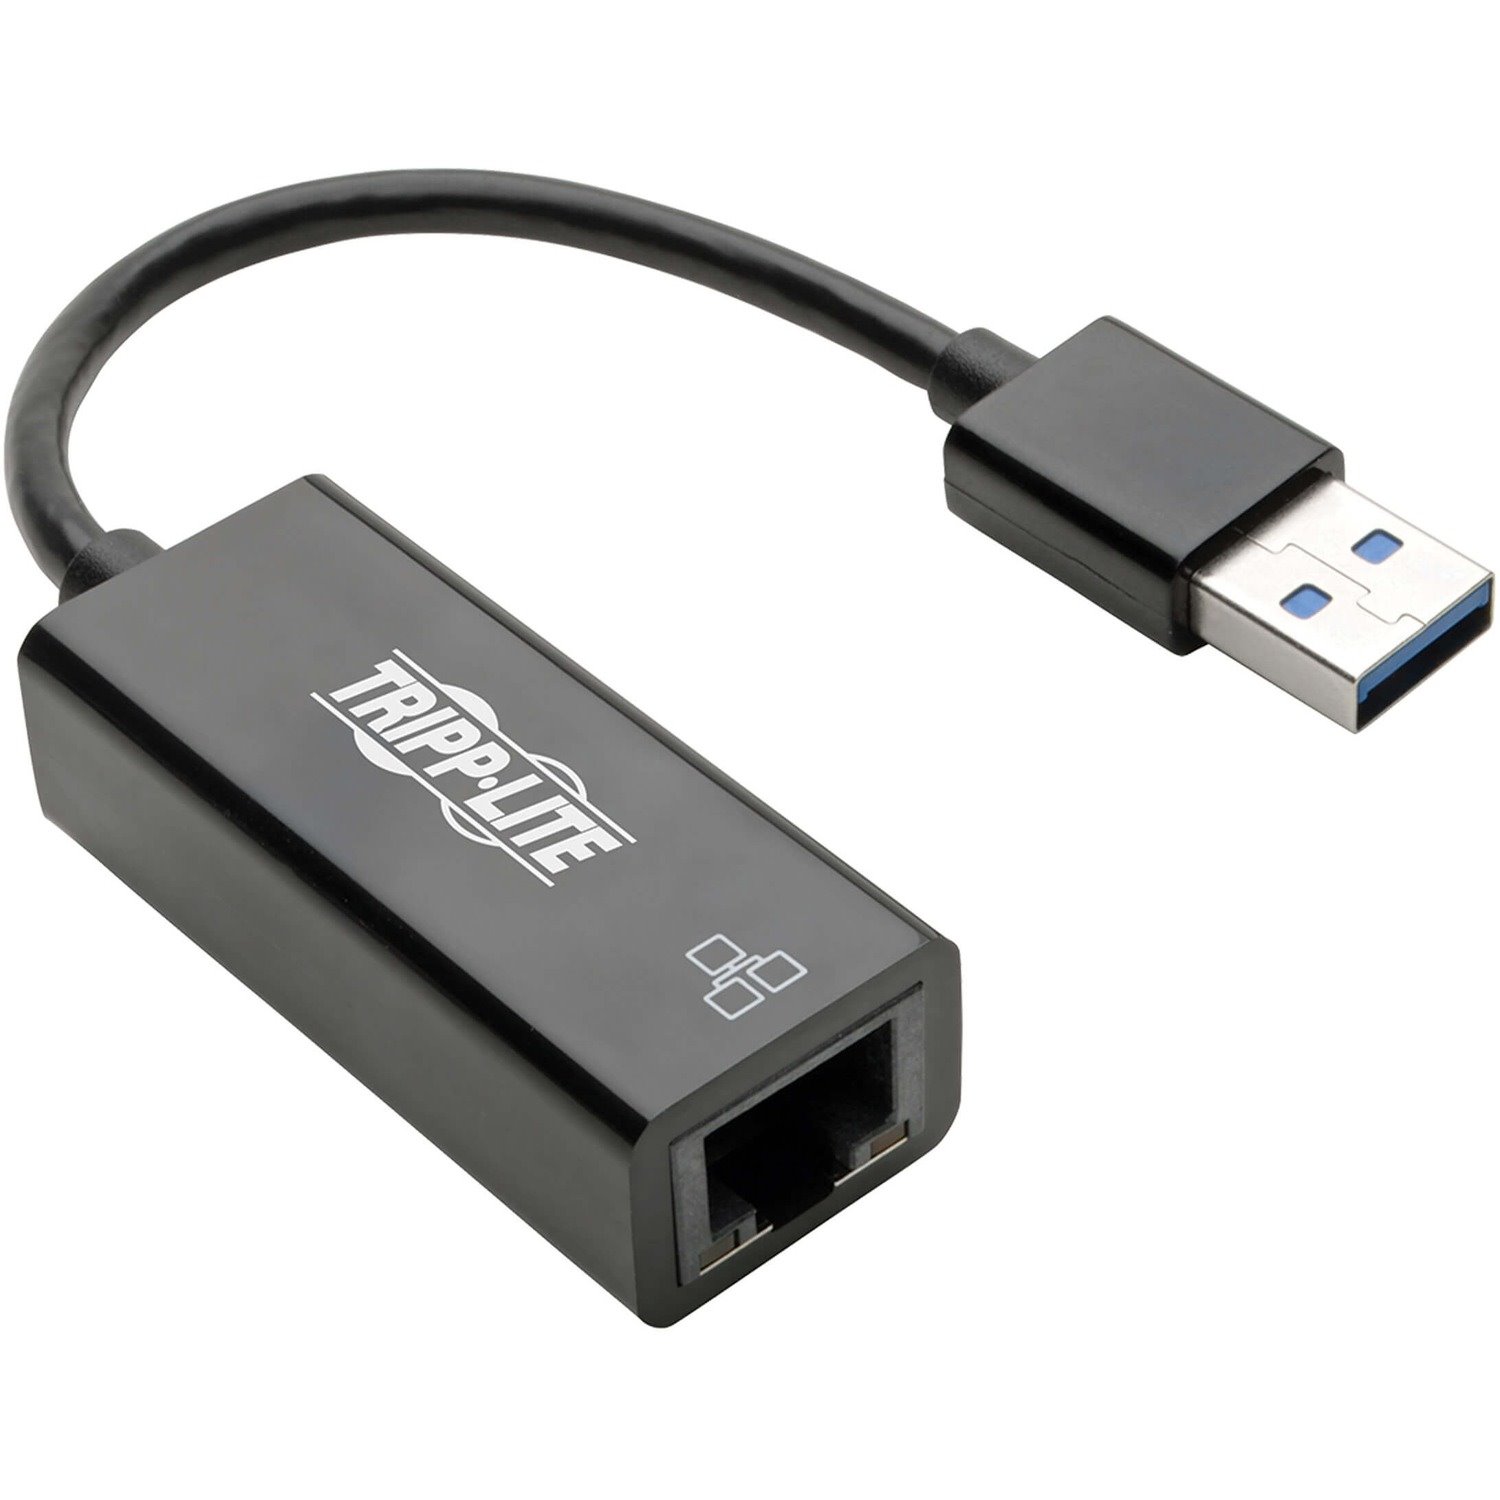 Eaton Tripp Lite Series USB 3.0 to Gigabit Ethernet NIC Network Adapter - 10/100/1000 Mbps, Black